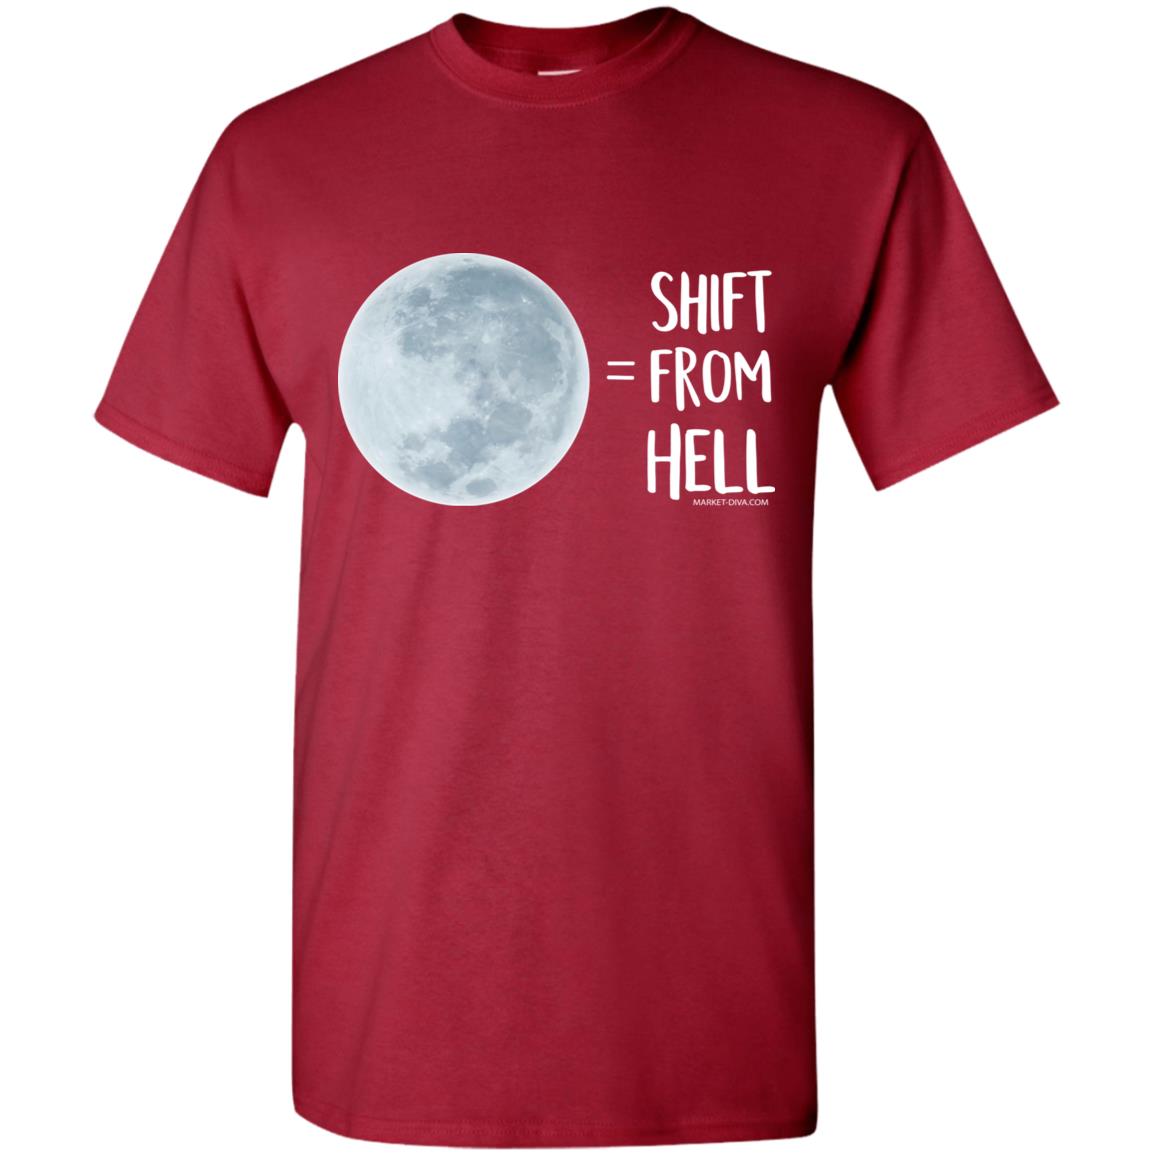 Full Moon = Shift From Hell